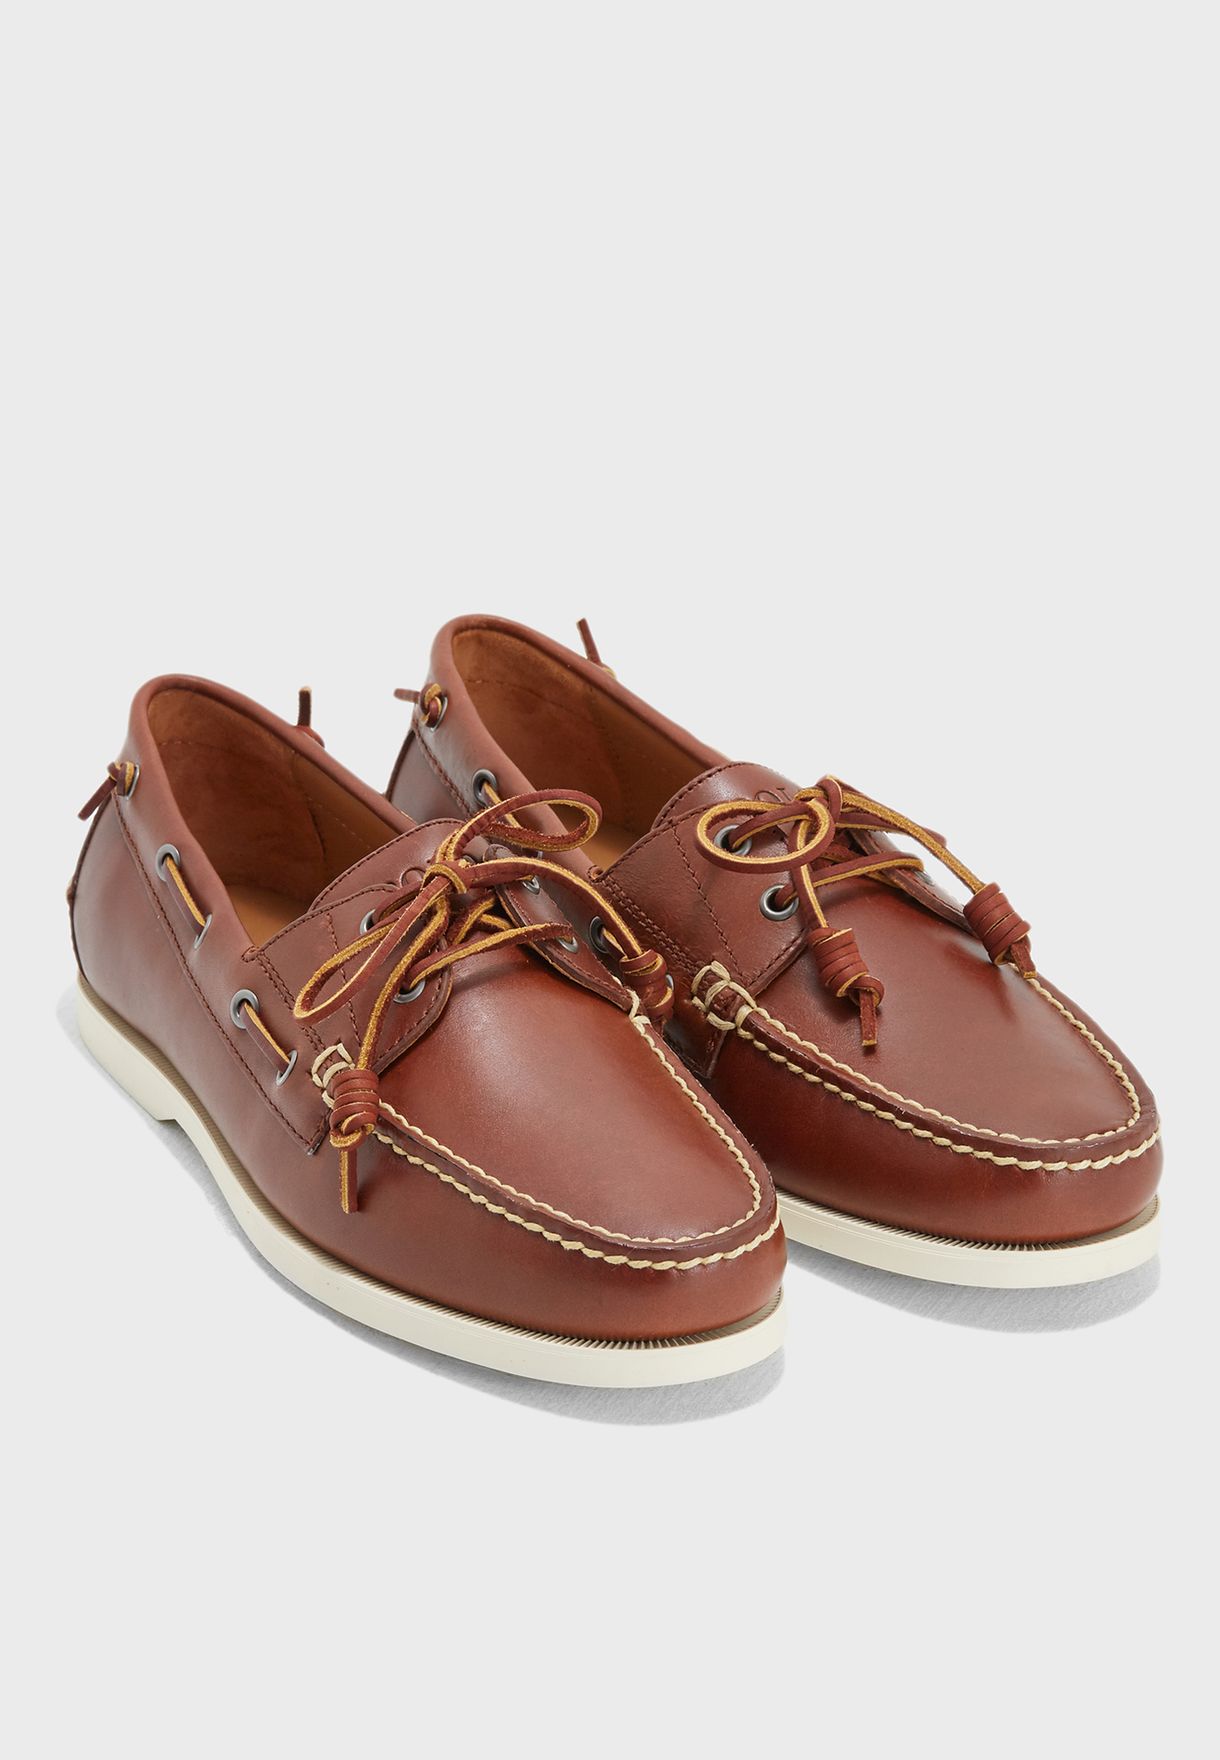 merton boat shoes